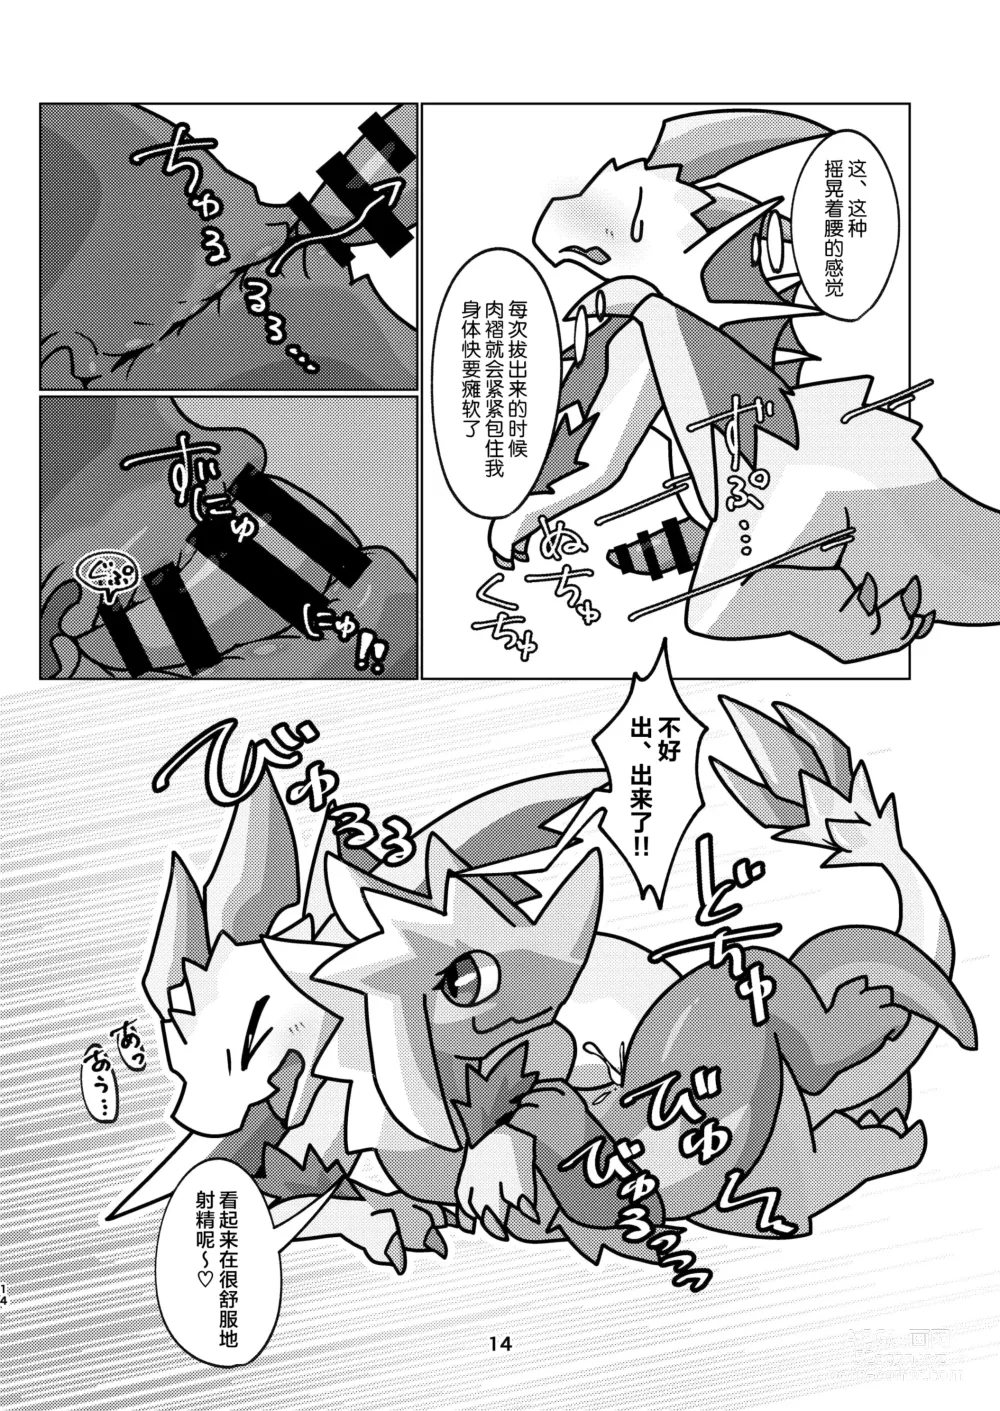 Page 14 of doujinshi 爱色冰龙的怪异克服